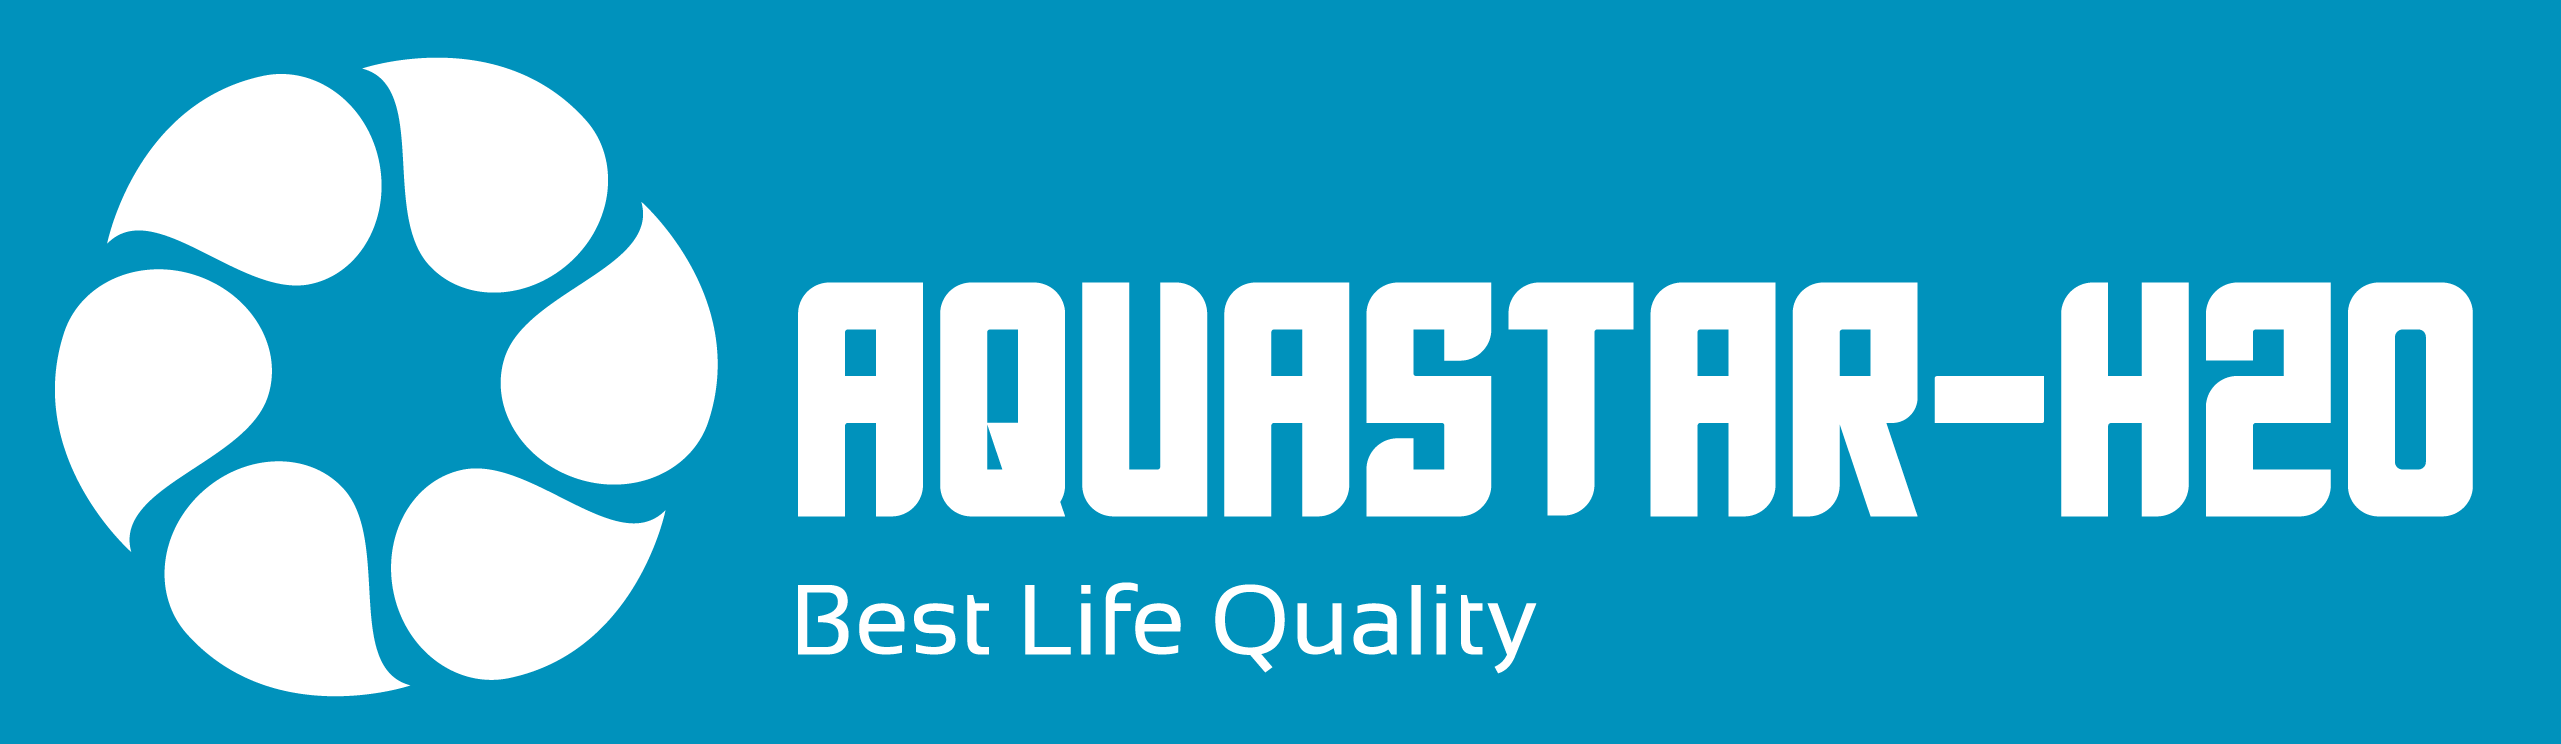 AQUASTAR-H2O logo